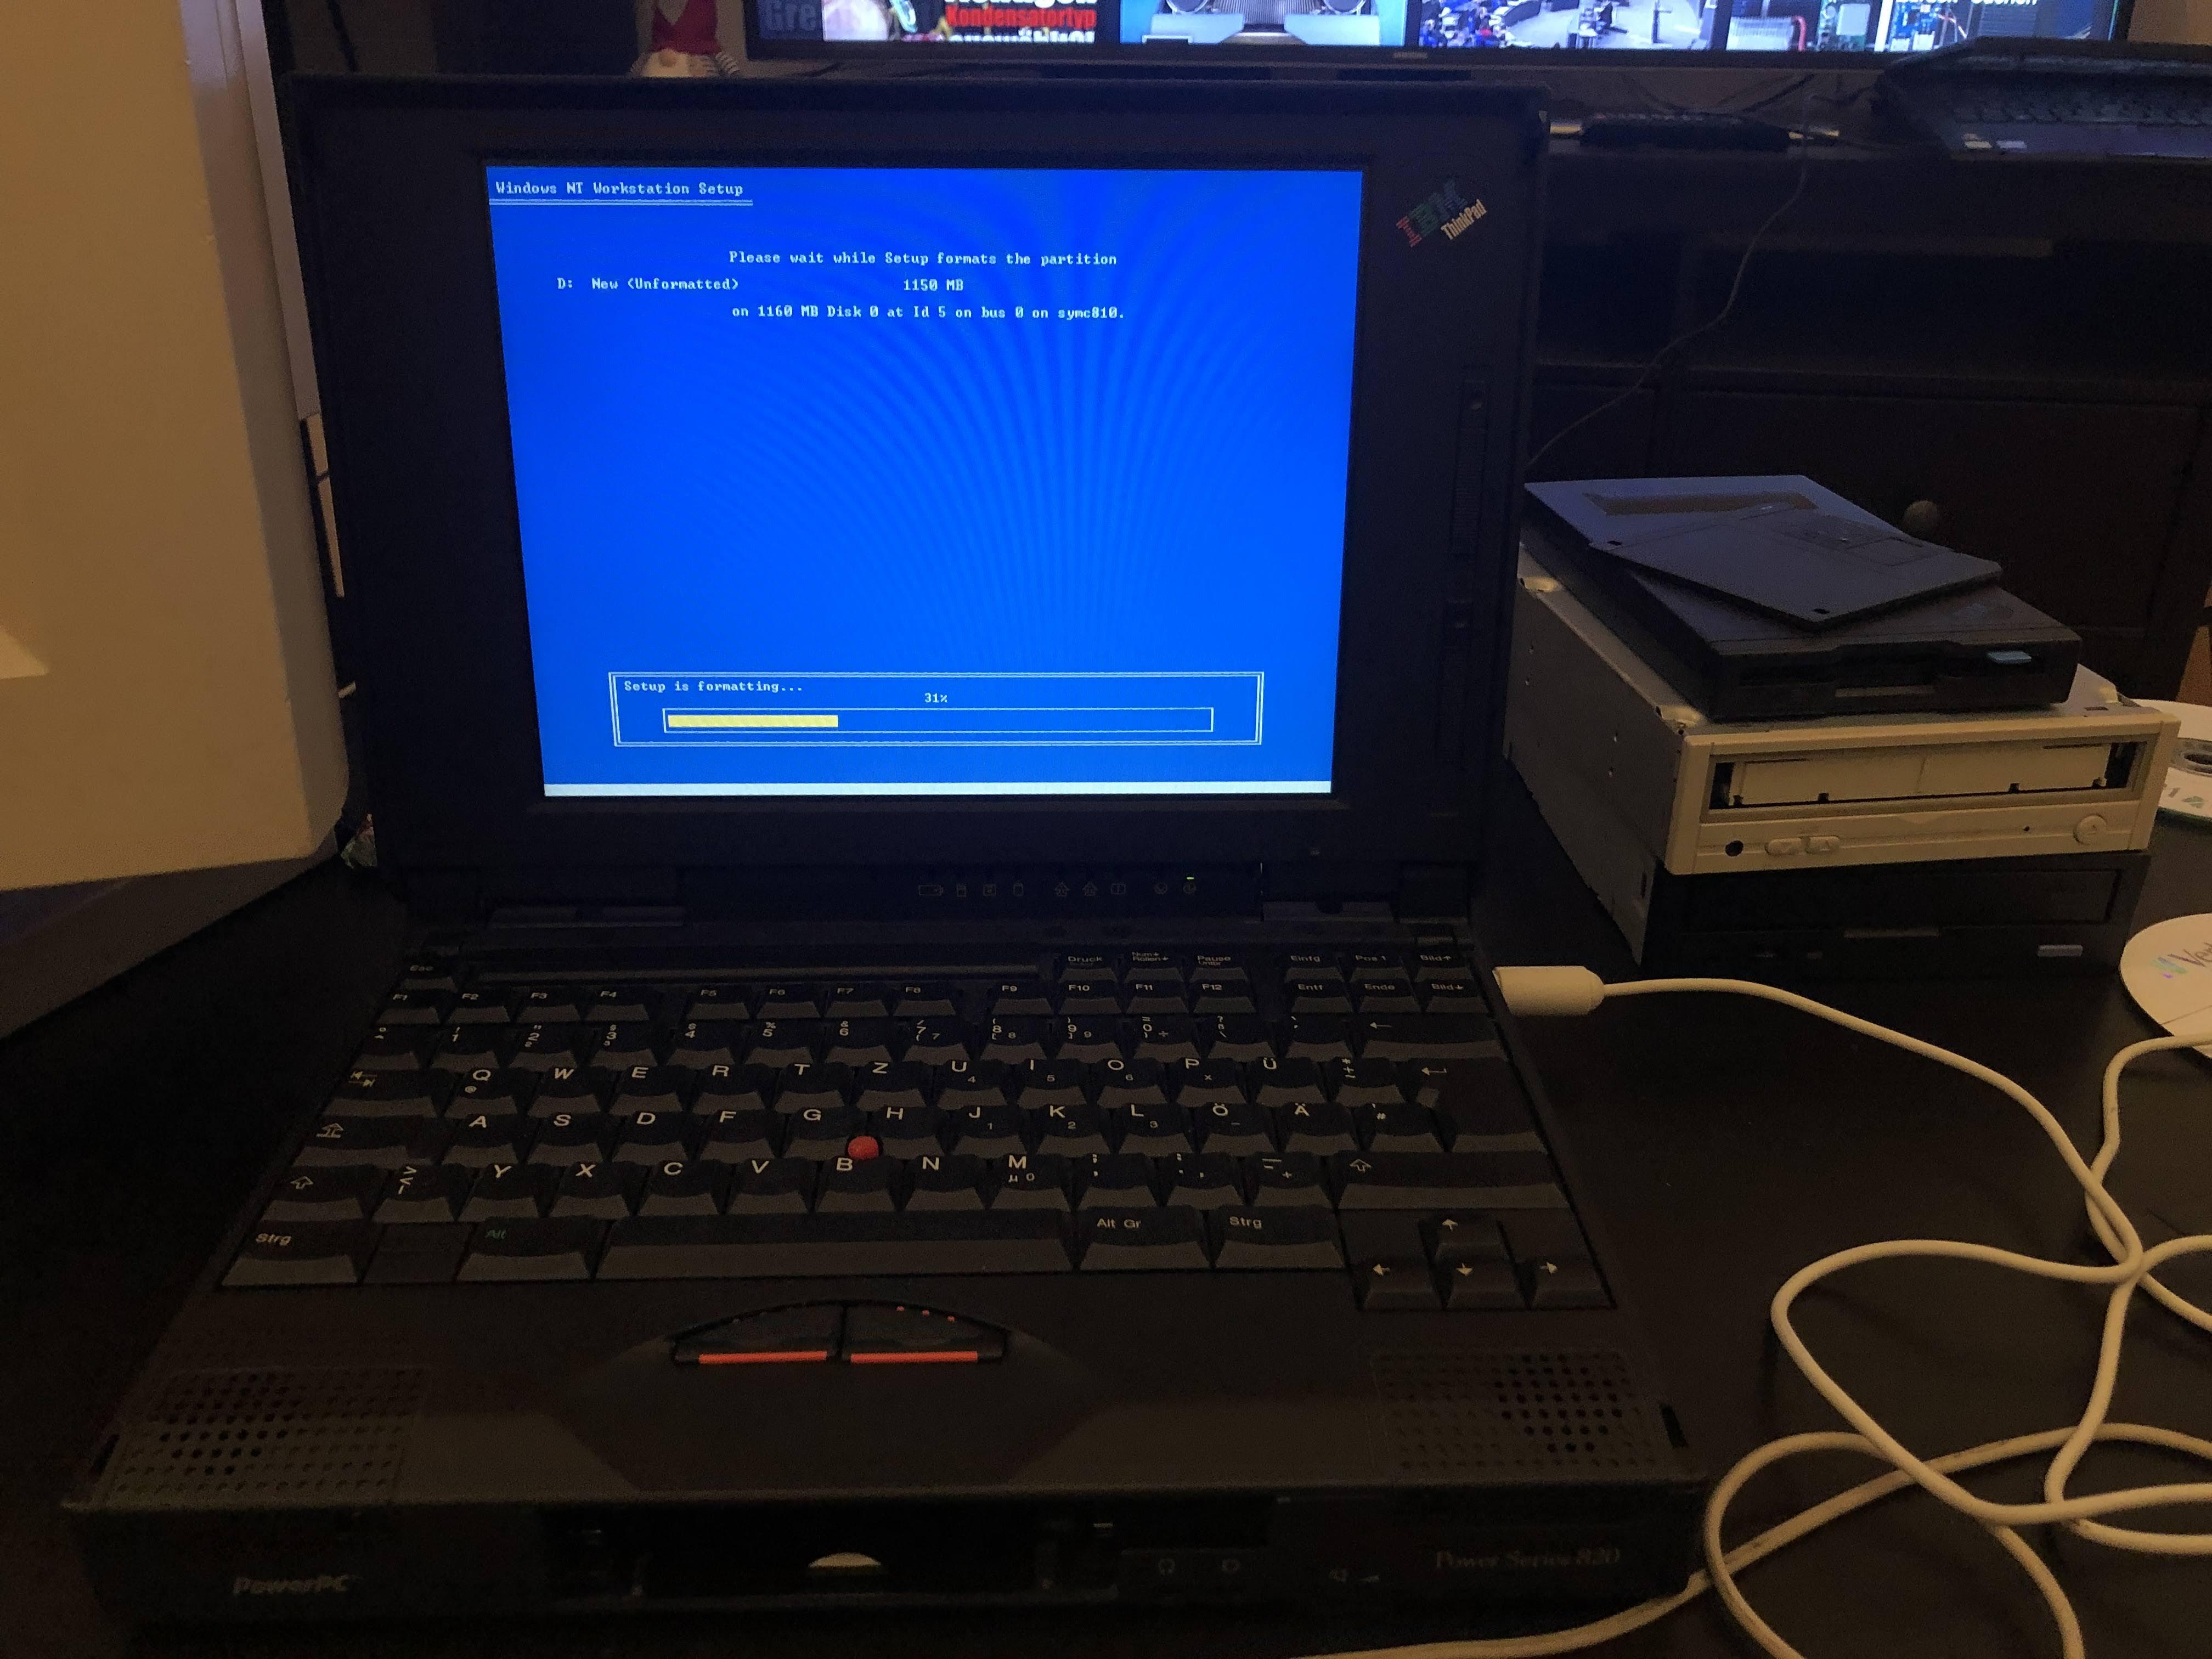 Windows NT 4.0 setup in progress